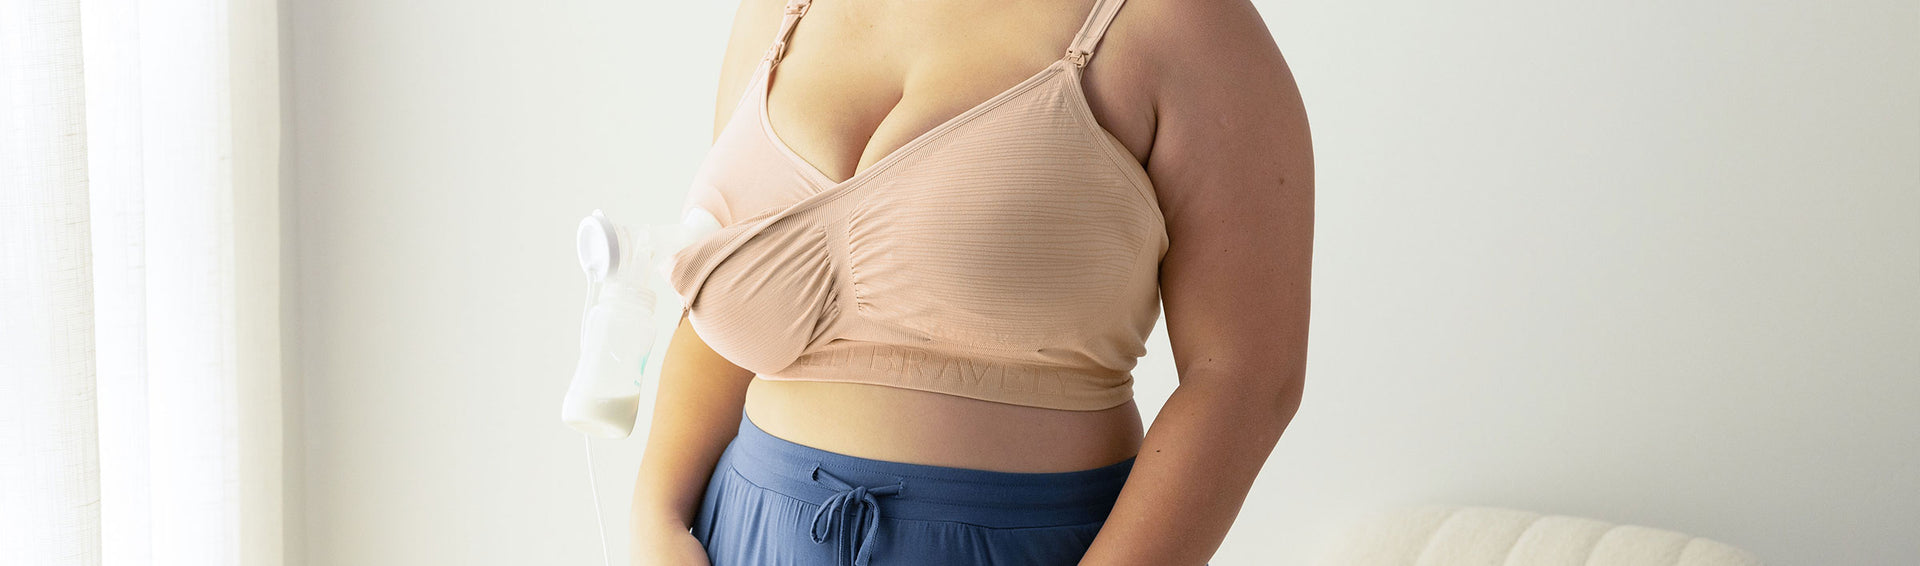 Best Pregnancy Bras For Large Breasts Soft Sports Bras Shapewear